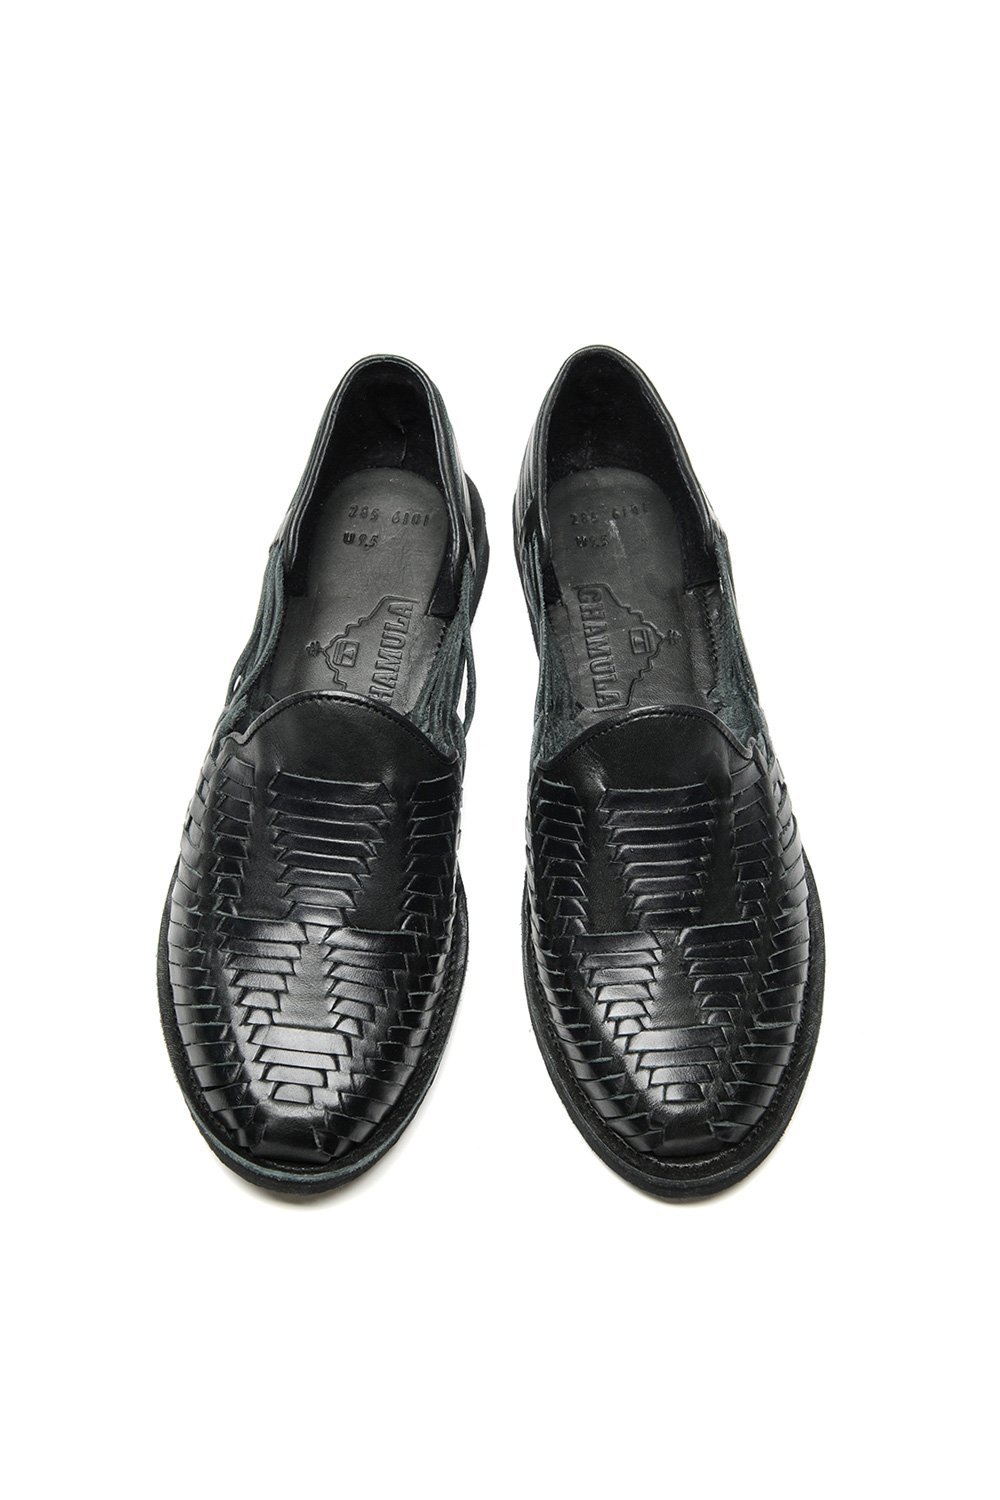 CHAMULA - Cancun Leather Huarache | Slip on Vegetable Tanned Sandals | Black - HANSEN Garments